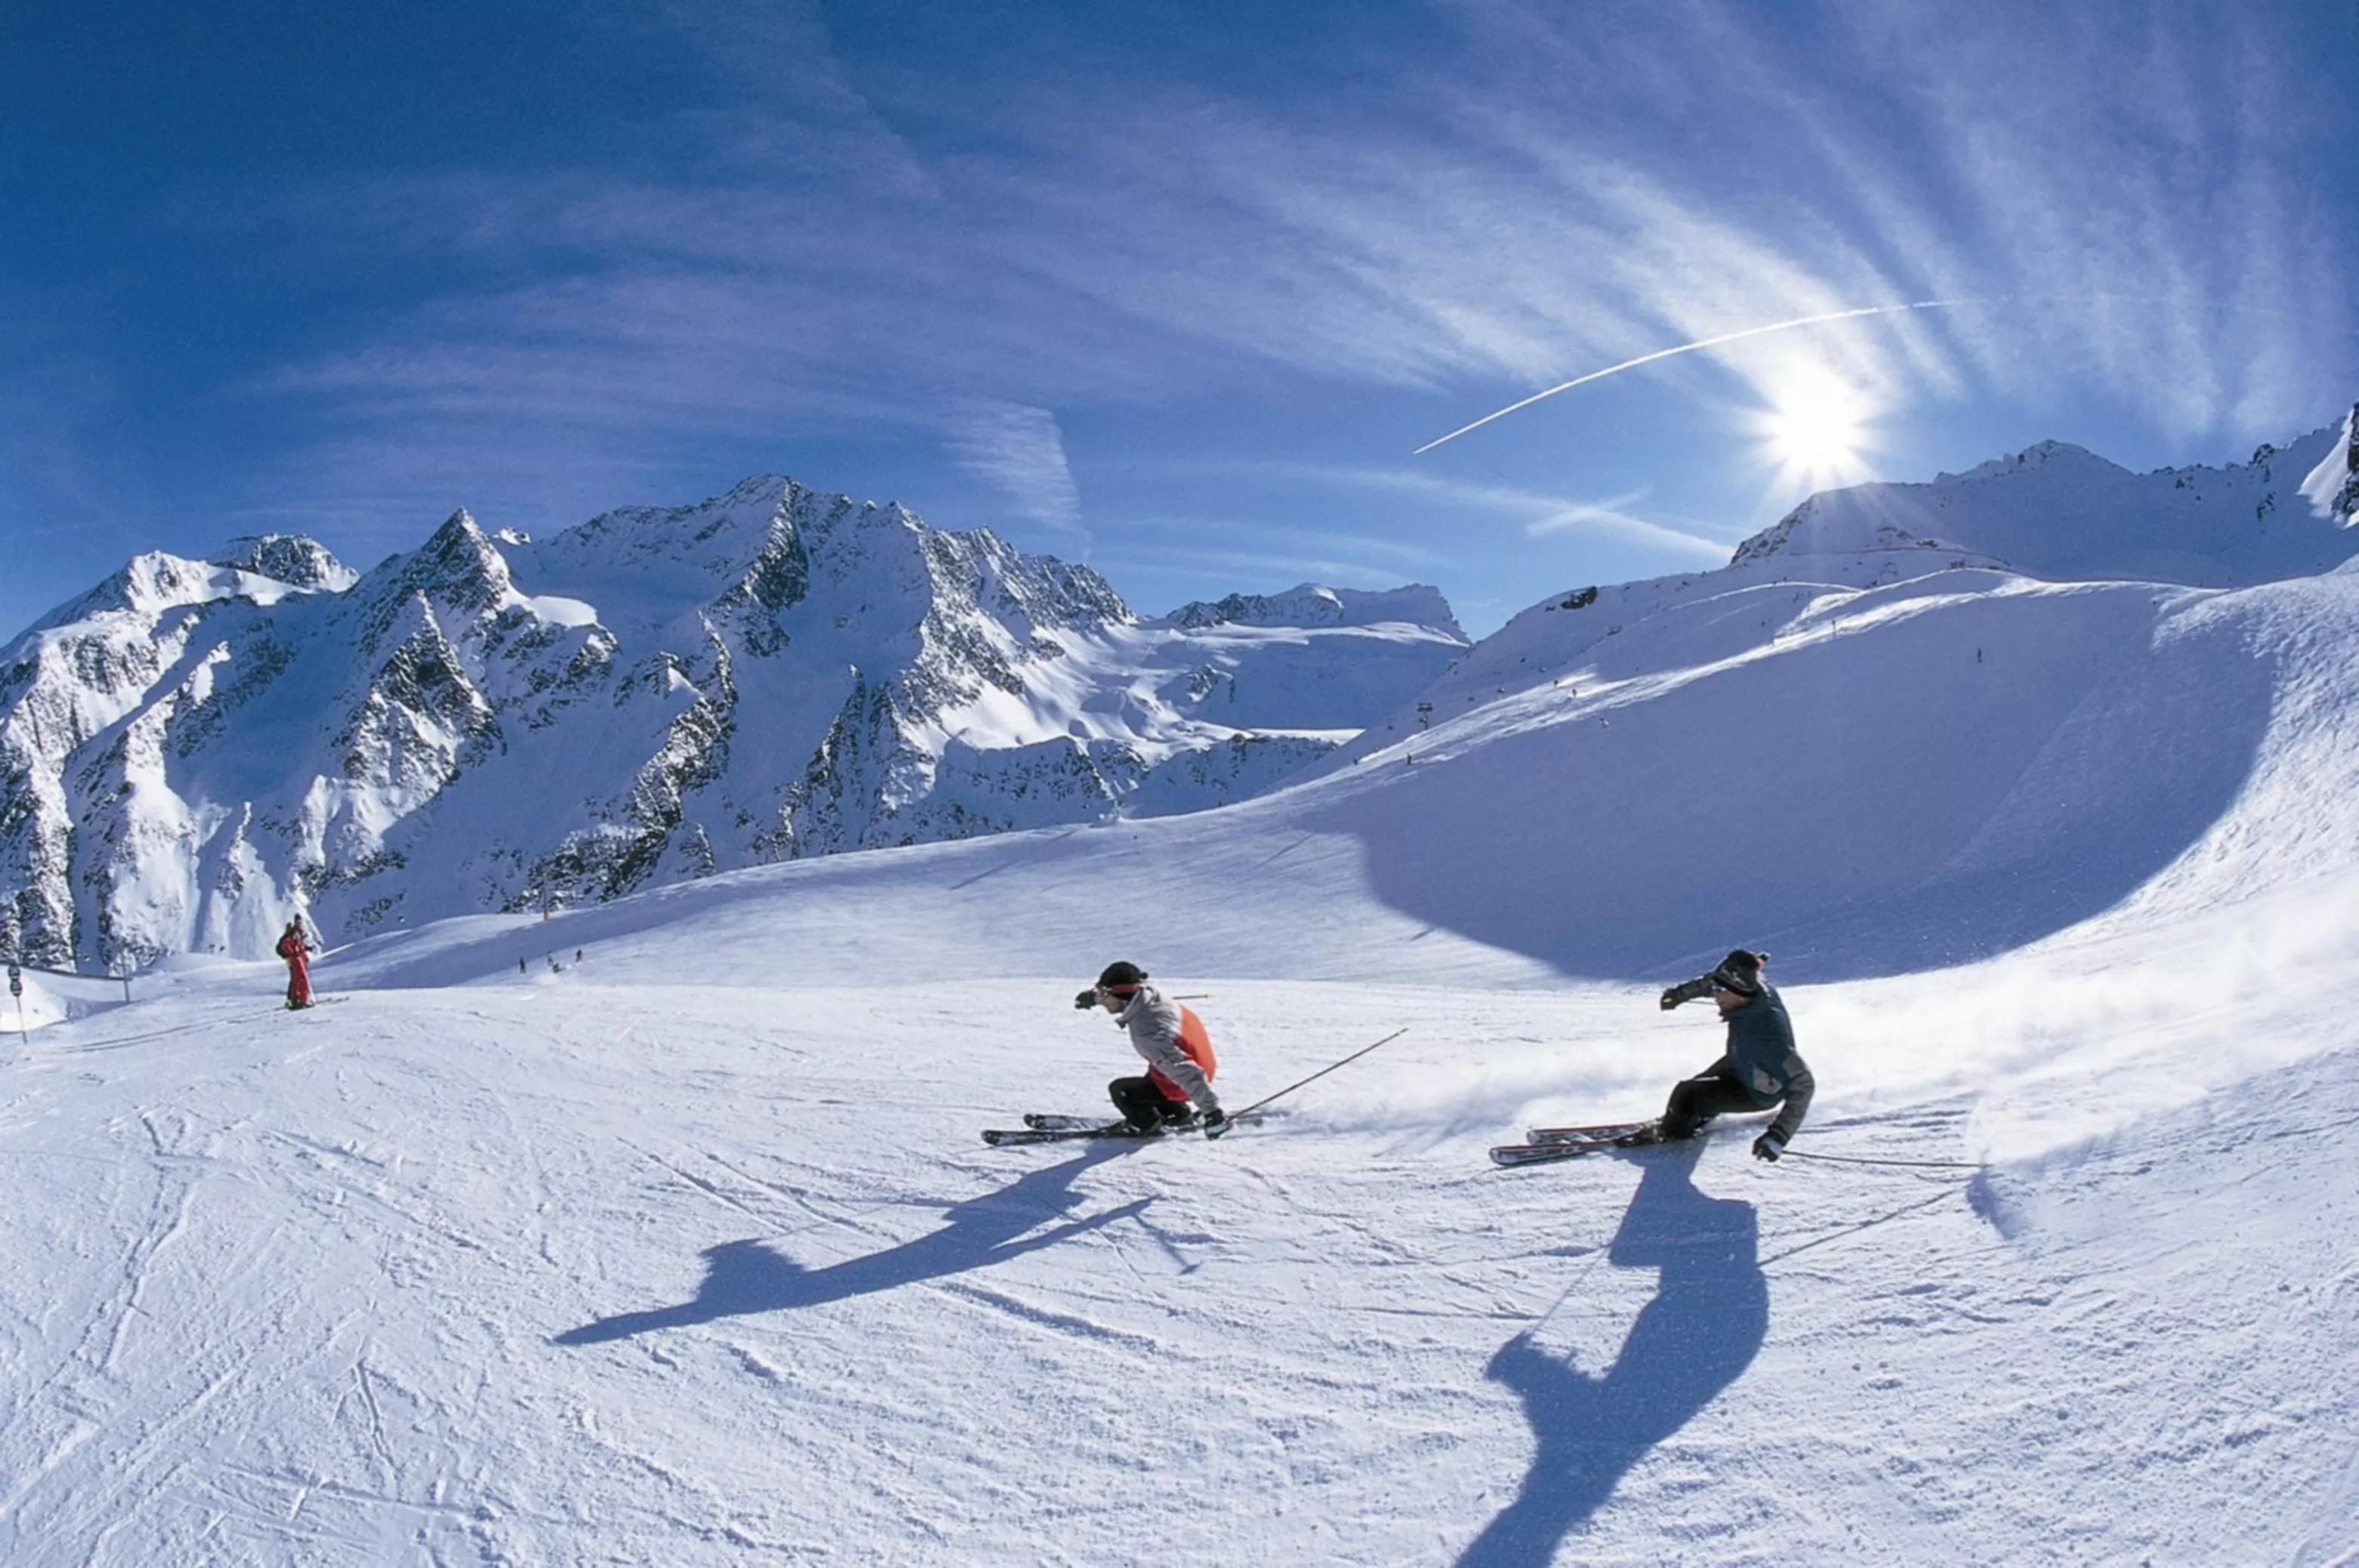 Sarikamis Ski Resort in Turkey, Central Asia | Snowboarding,Skiing - Rated 3.9